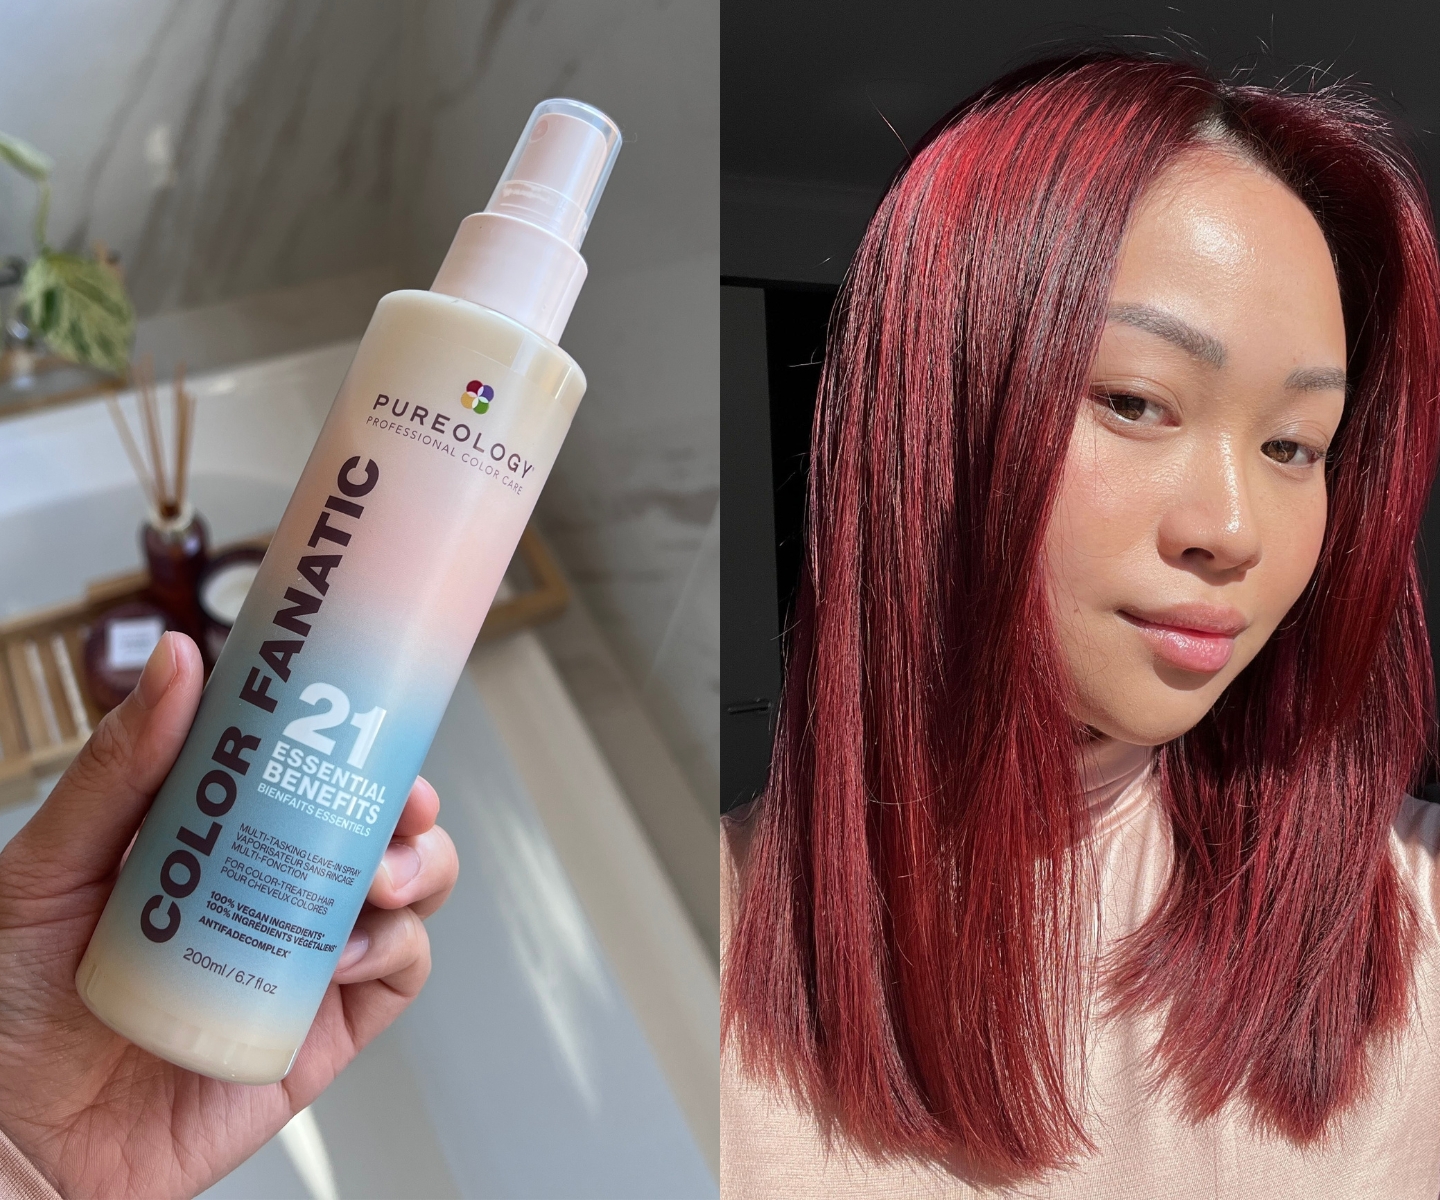 Pureology Colour Fanatic Hair Treatment Spray (200 ml)